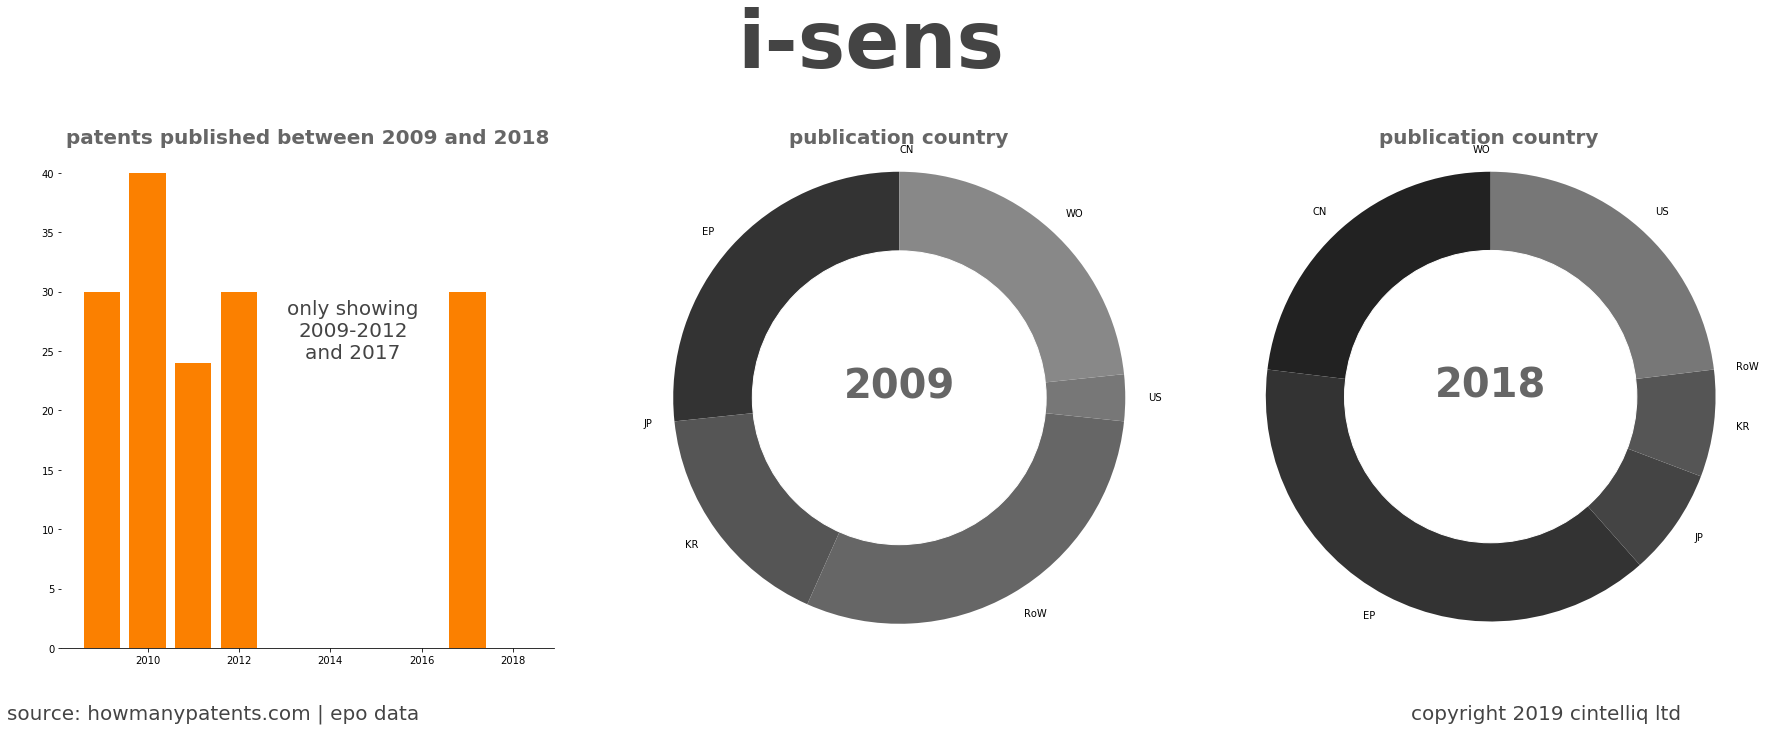 summary of patents for I-Sens